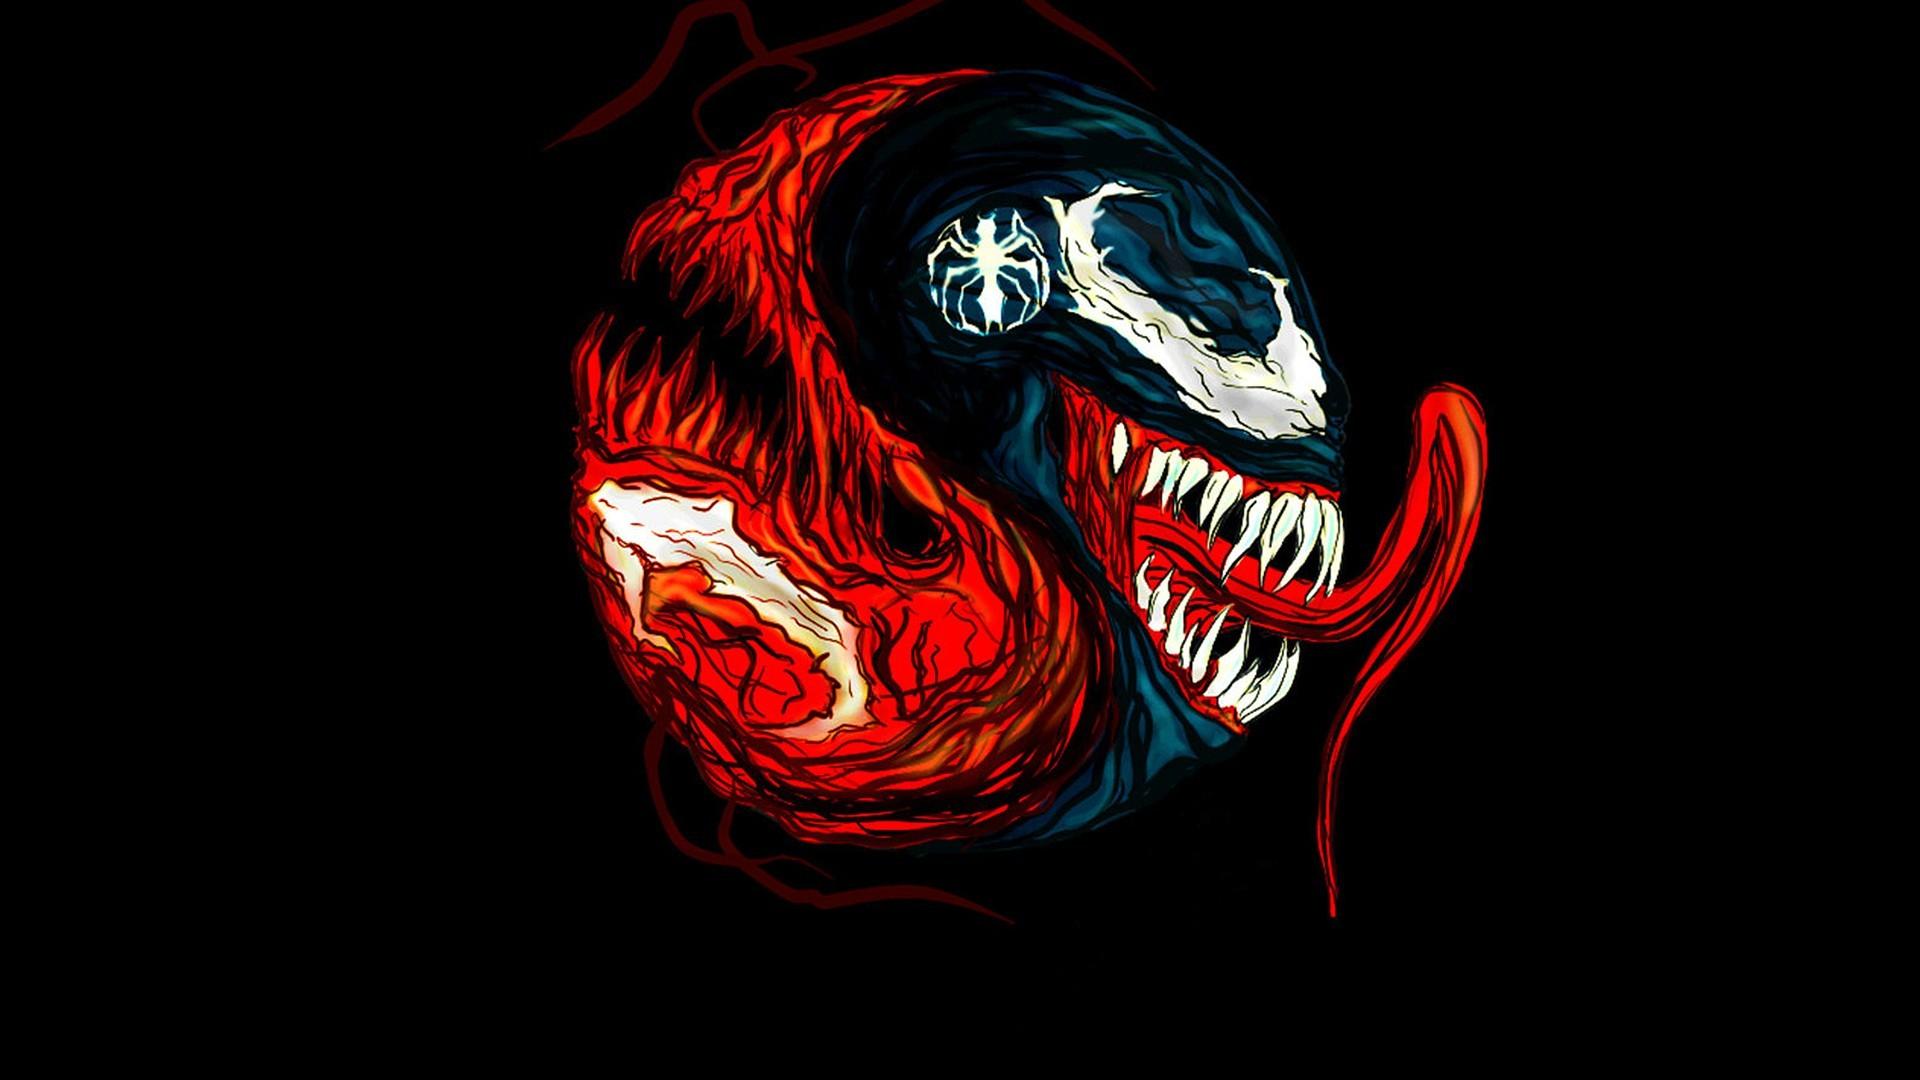  marvel comics venom black background fan art wallpaper 73018